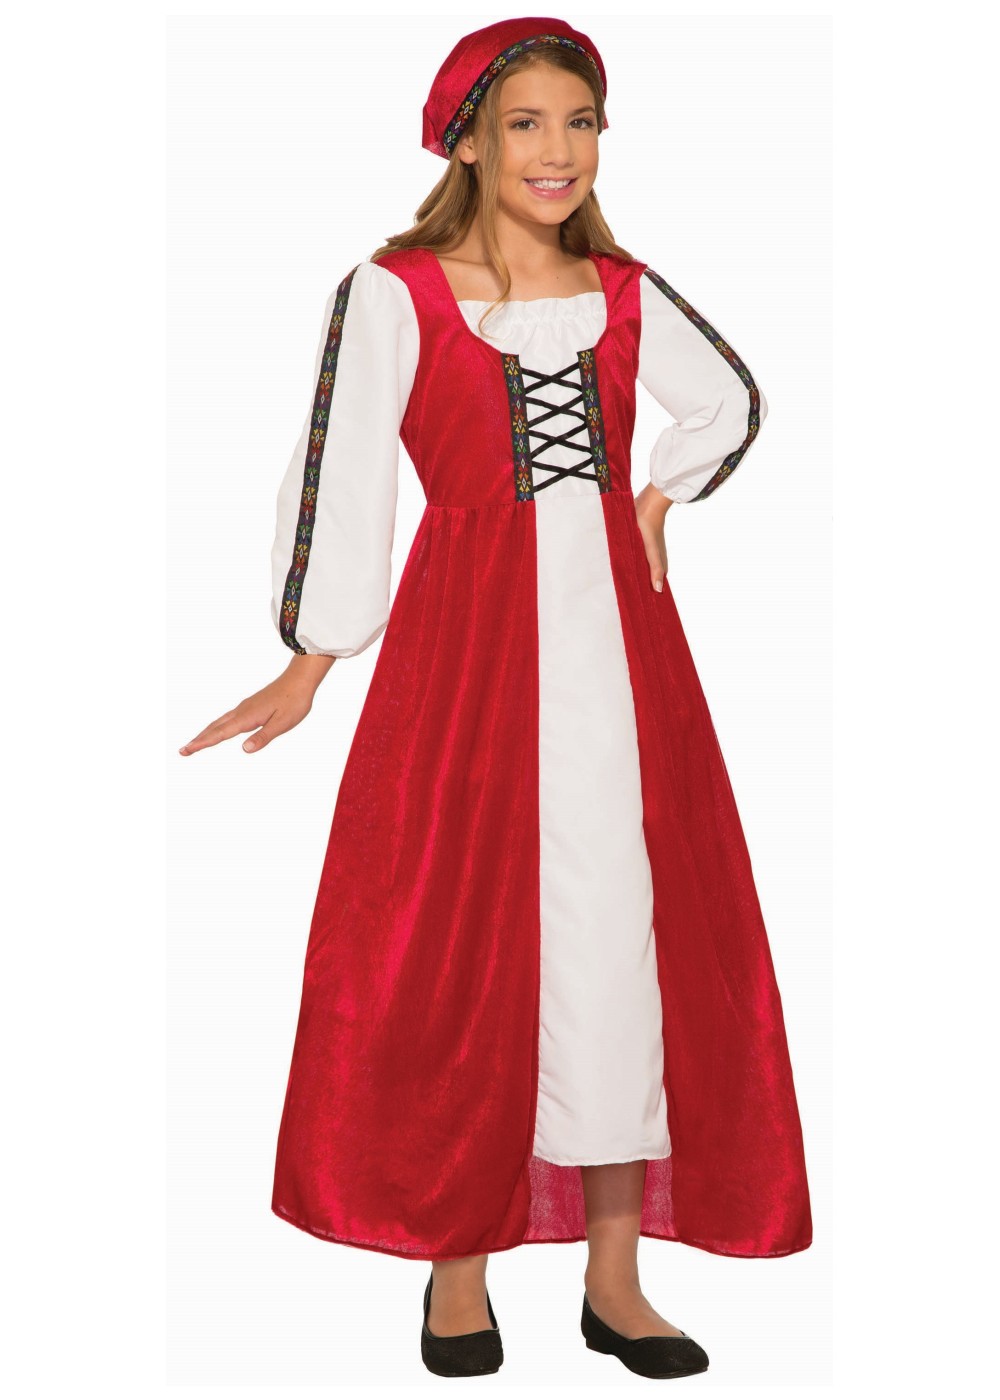 Girls Renaissance Maiden Costume - Renaissance Costumes